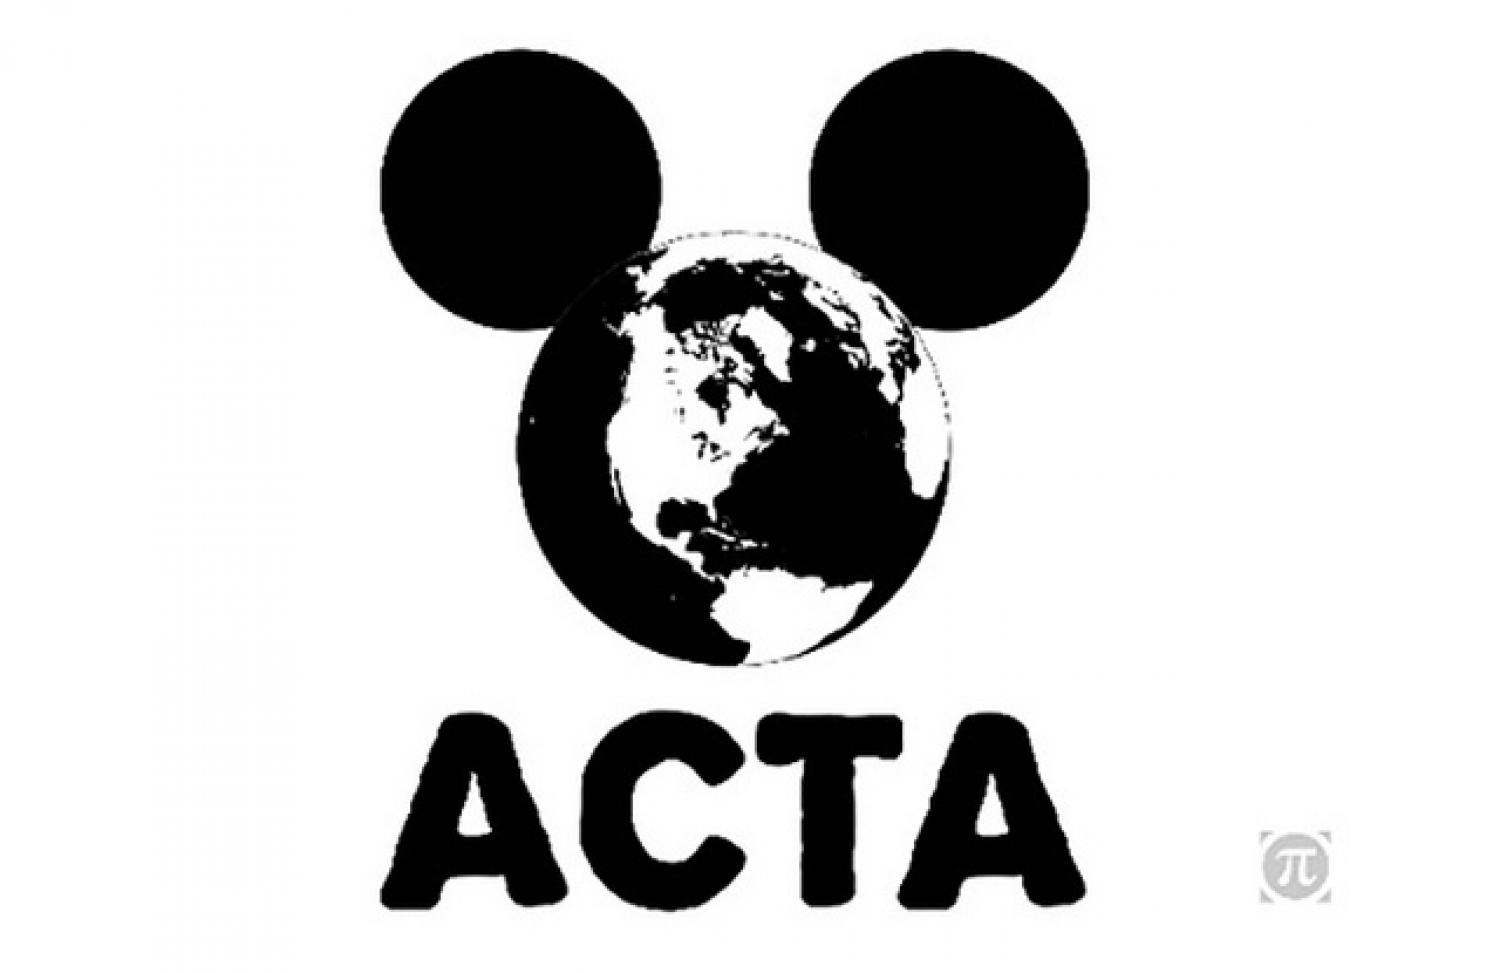 ACTA is not dead